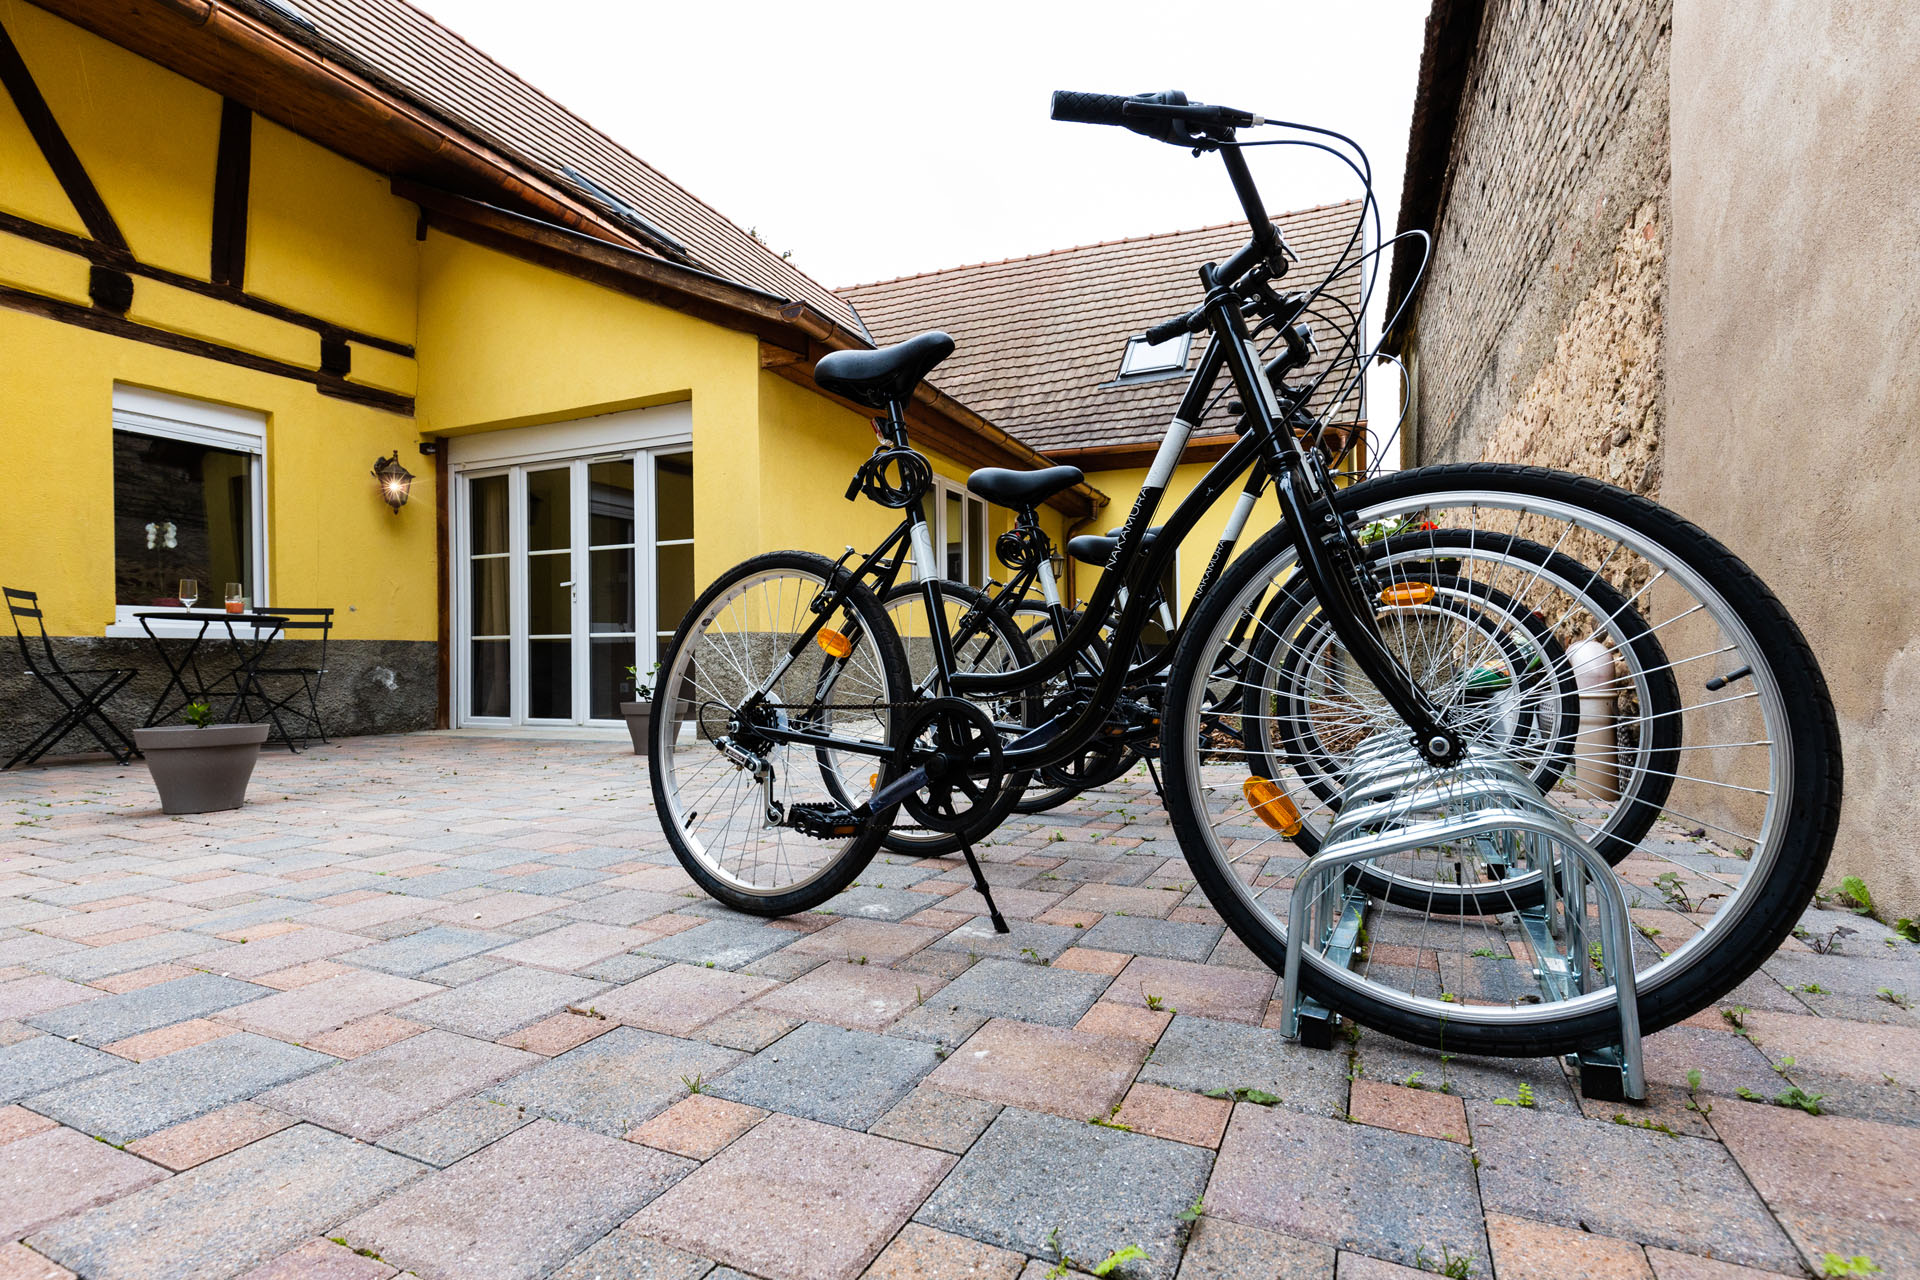 Vélo - Les Chambres de Clem' - Bernardswiller - Alsace